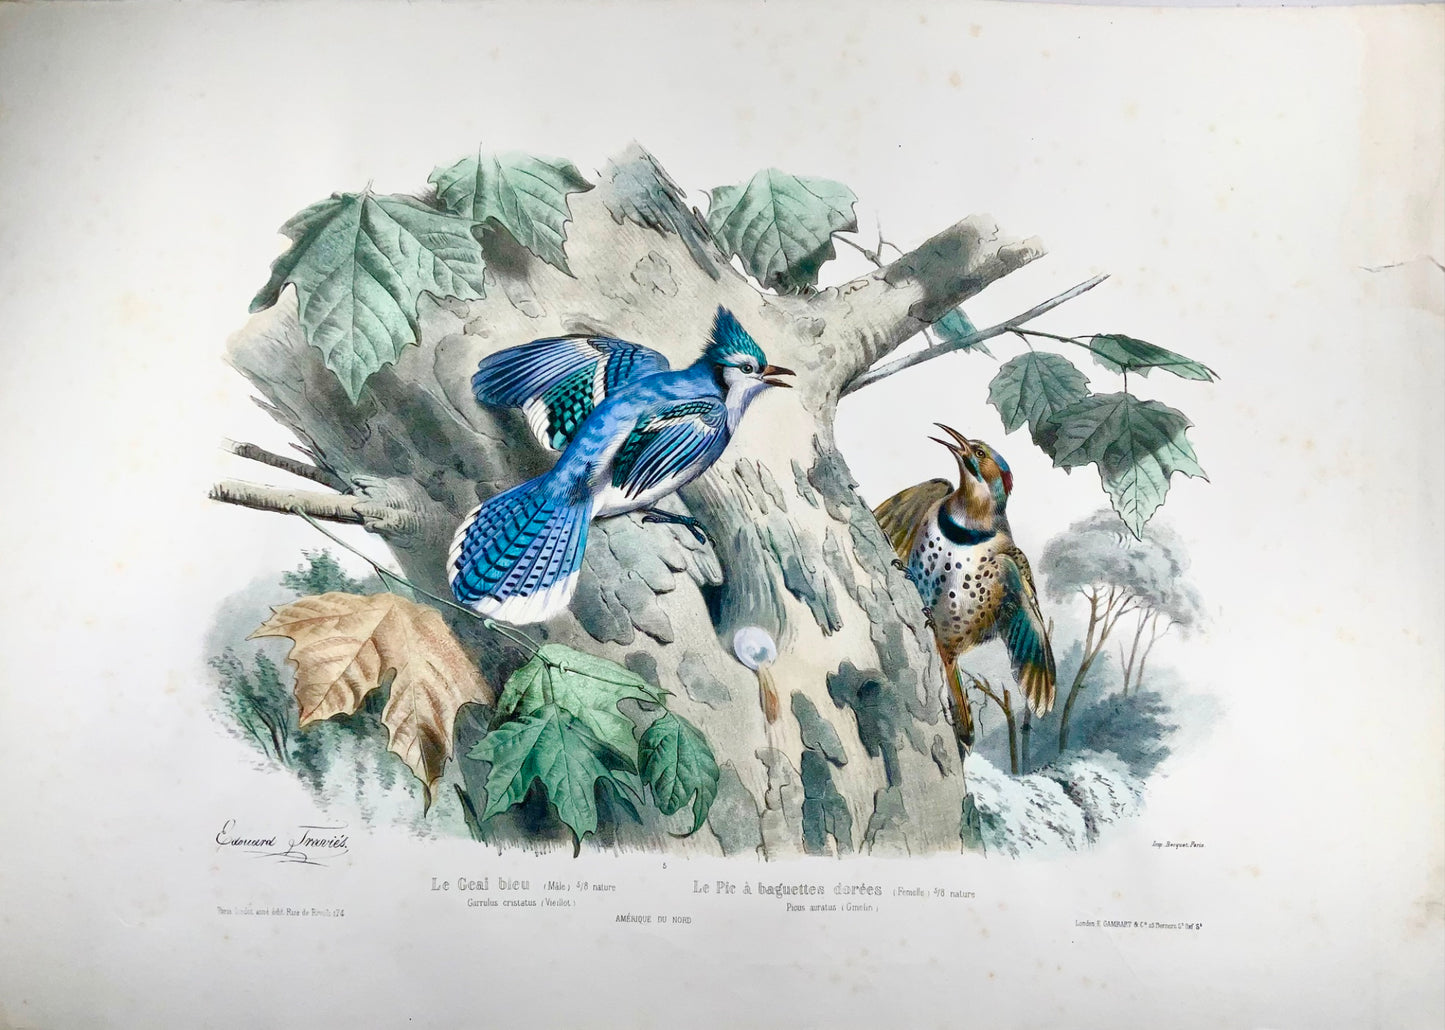 1857 Ed Travies [b1809] 45 x 62cm, Le Geai bleu, Le pic, ornithology